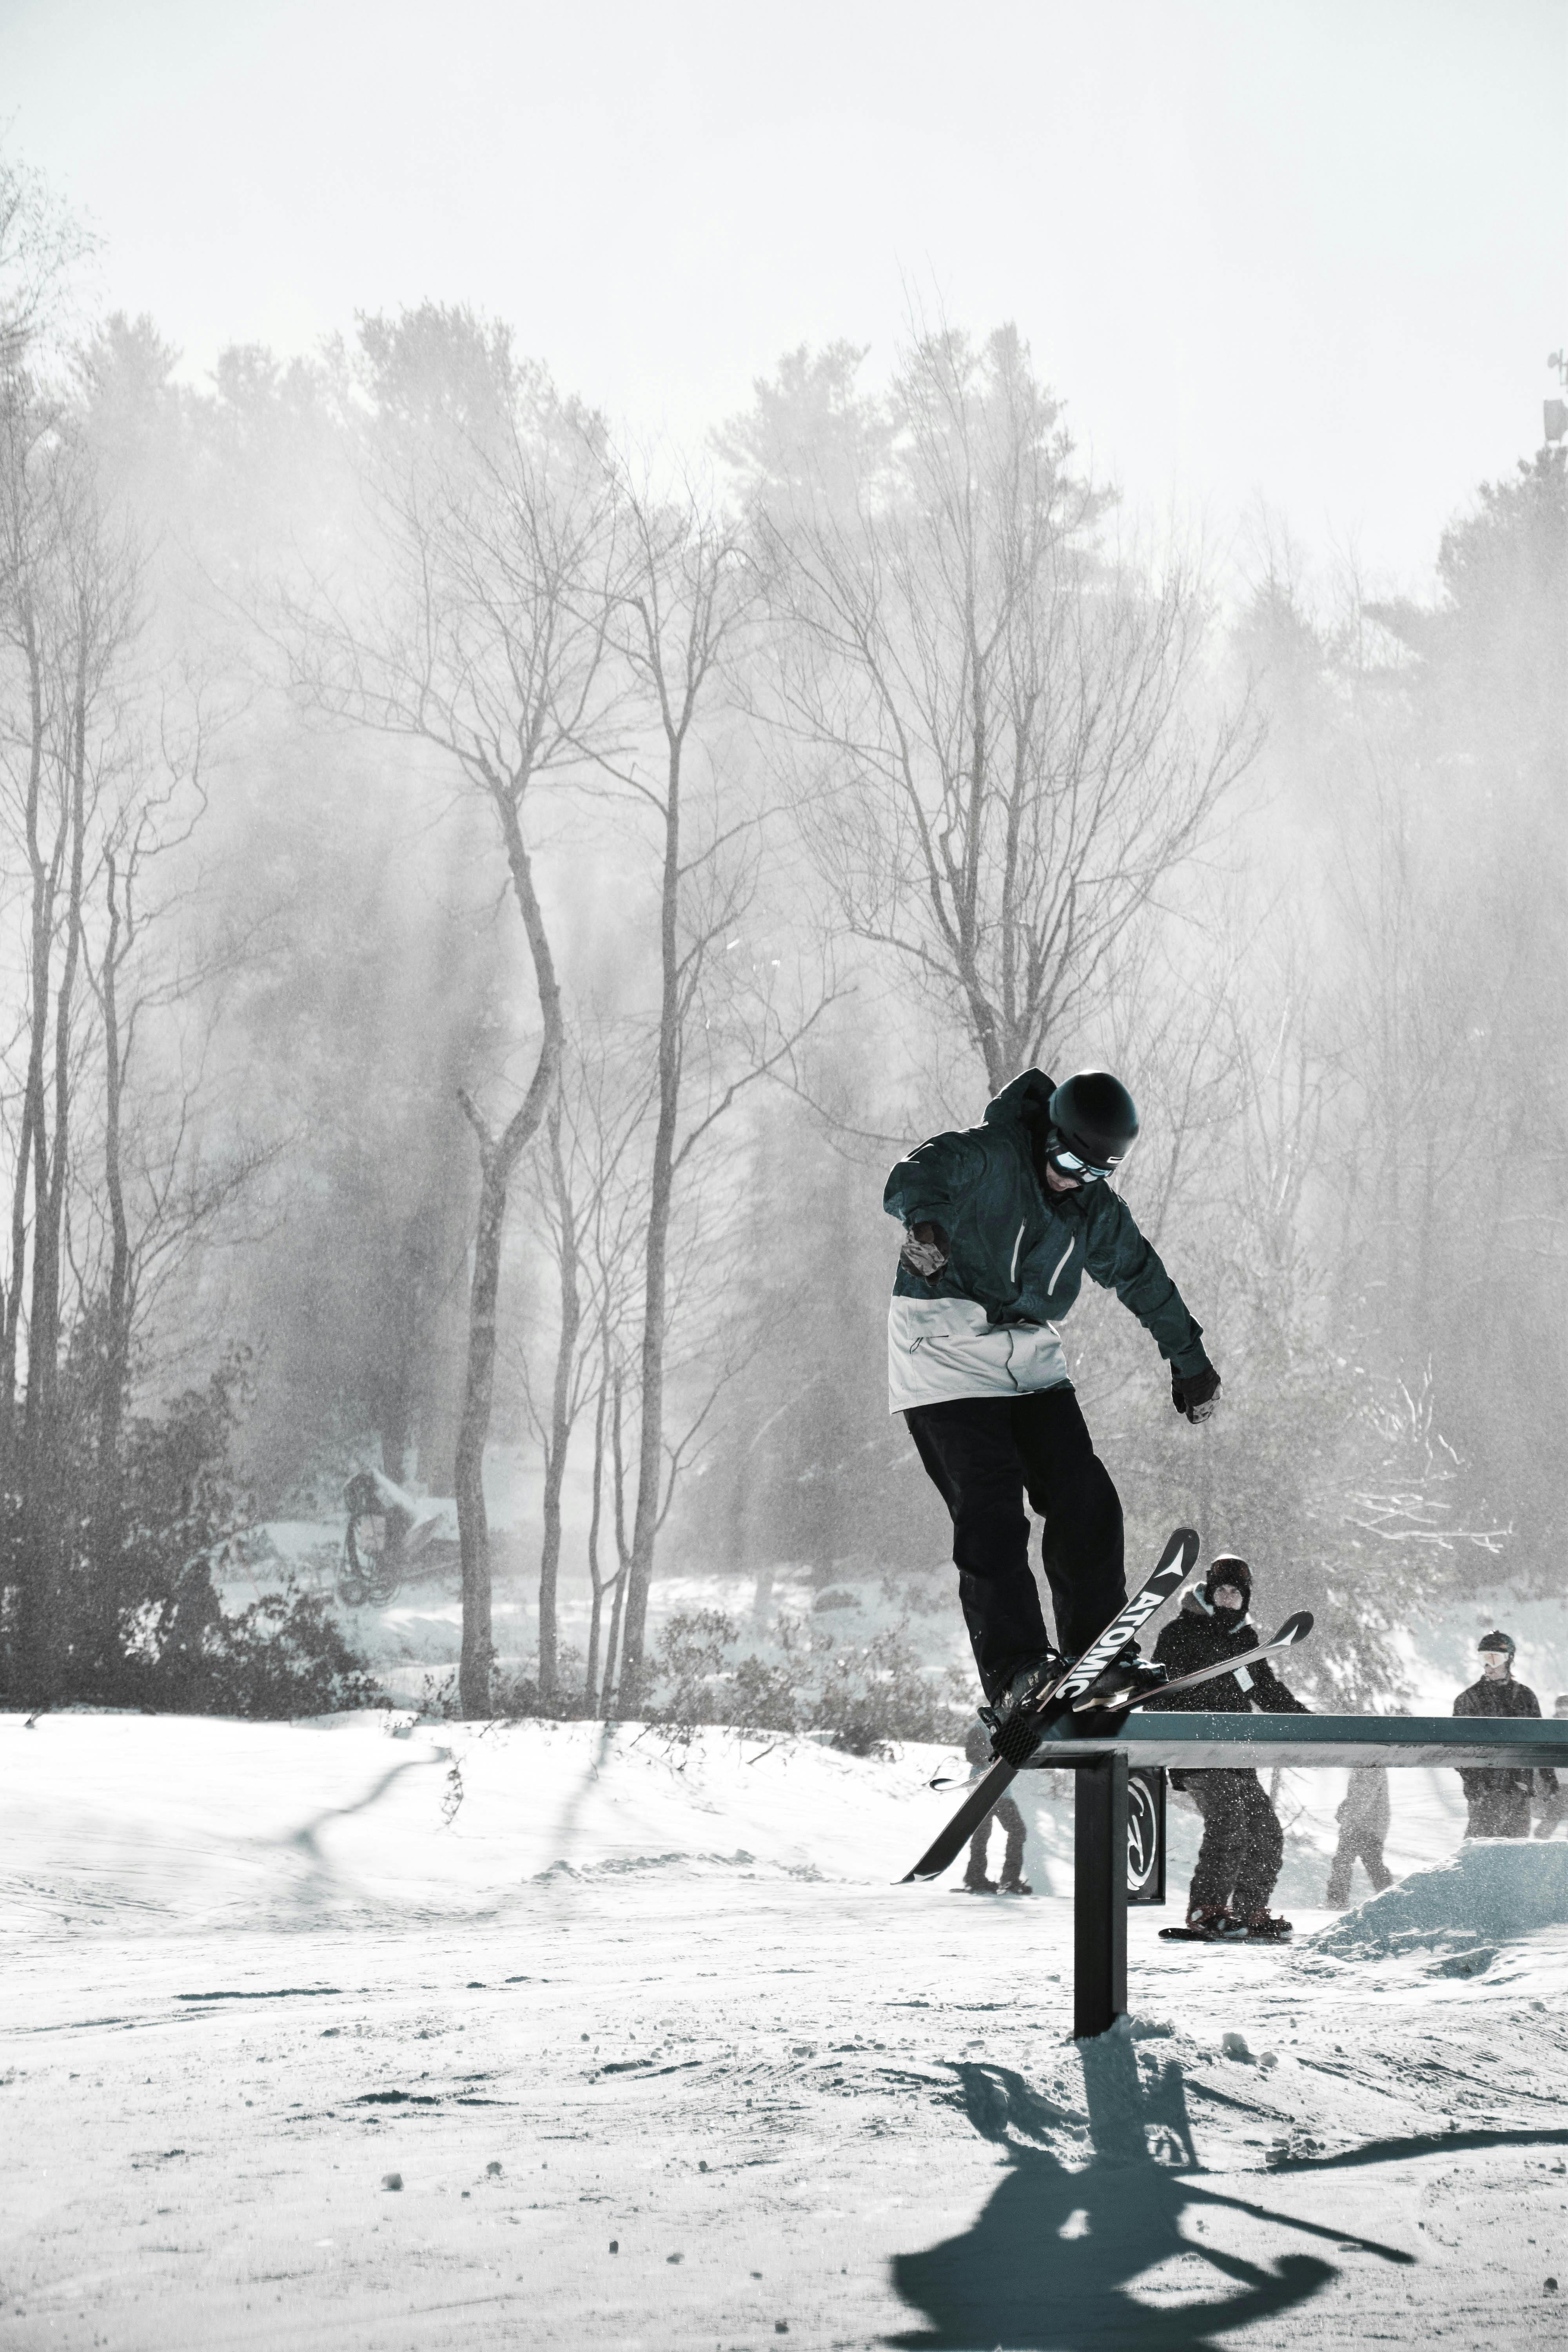 crazy snowboard tricks